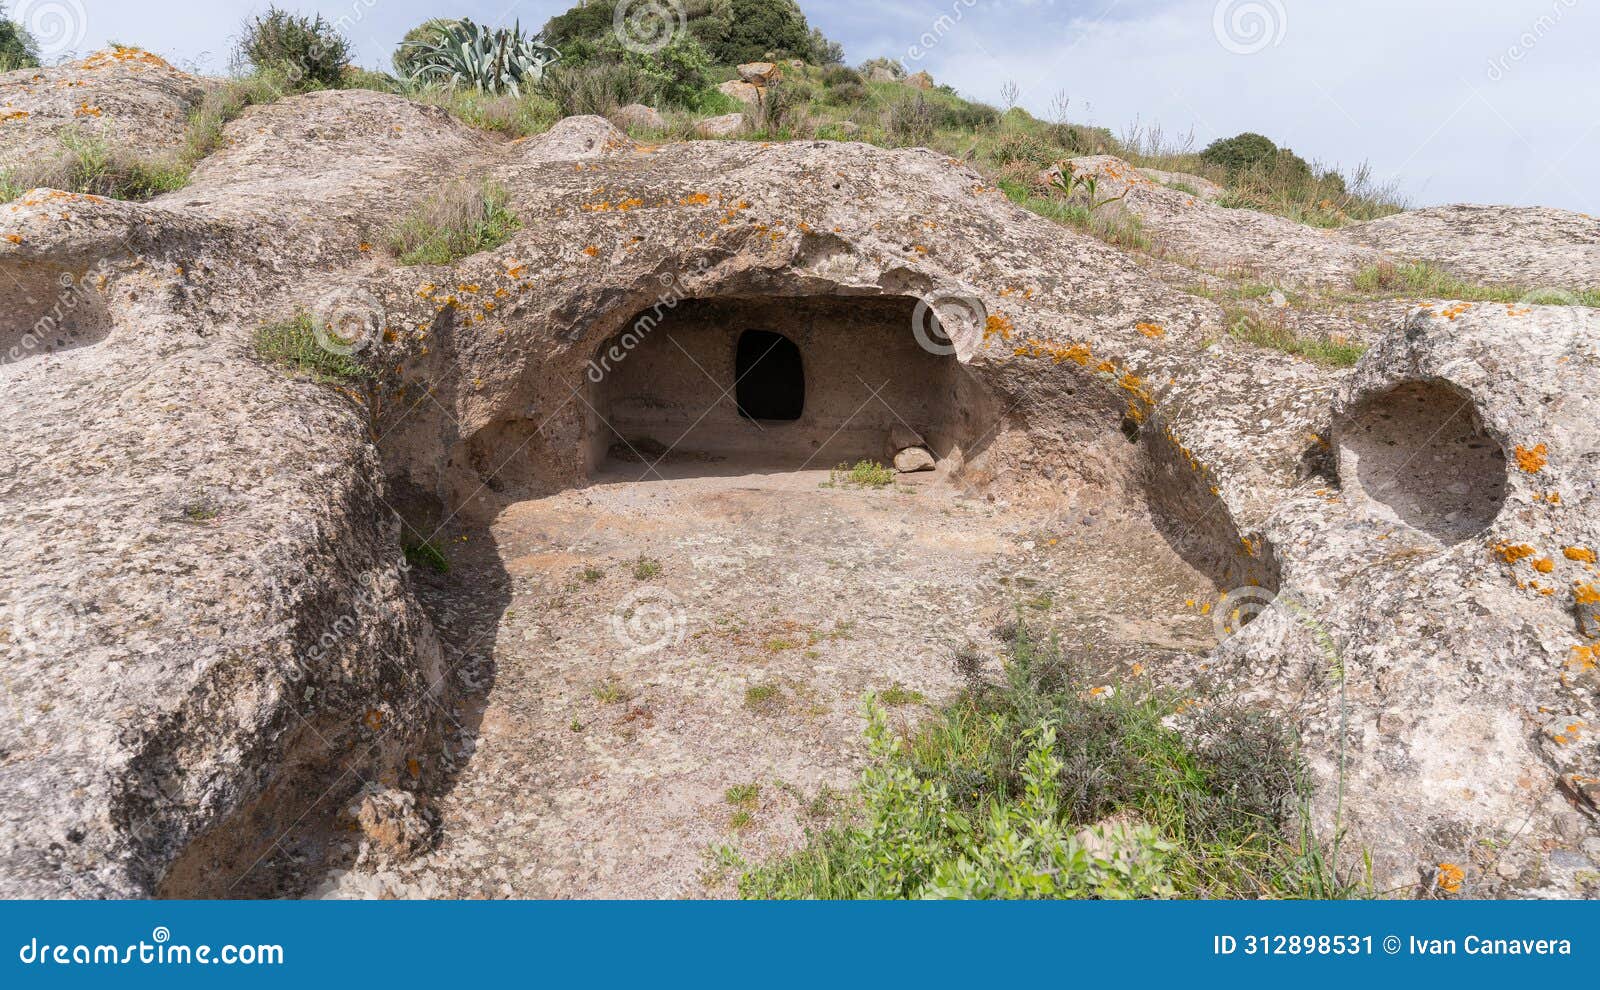 domus de janas and necropolis of santu pedru ancient nuragic tombs